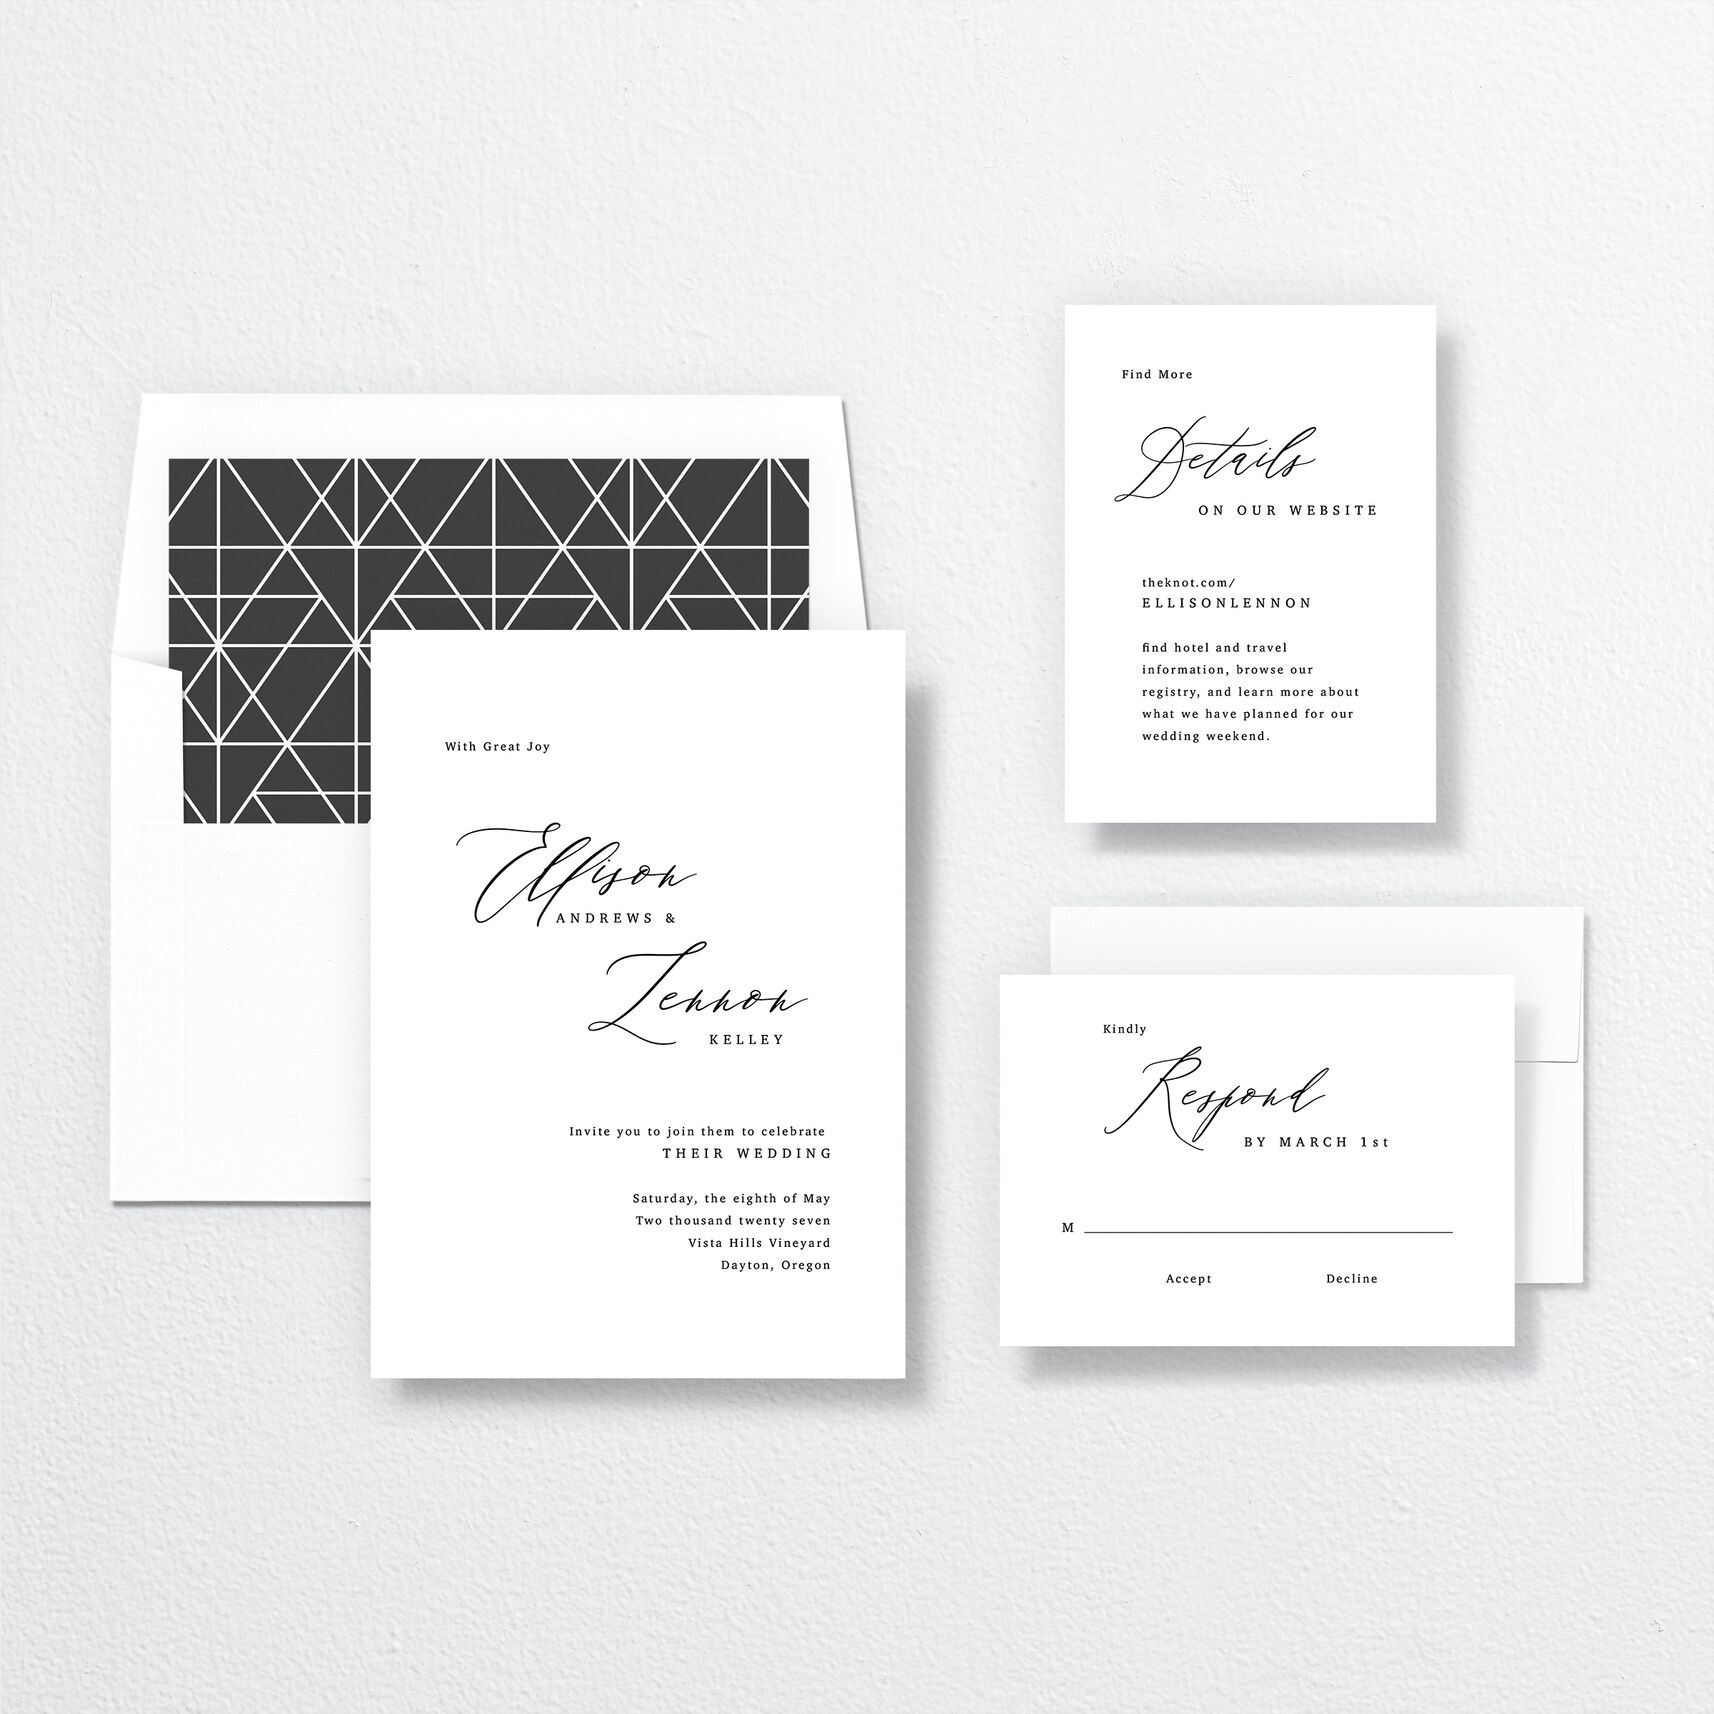 Minimal Calligraphy Wedding Invitations suite in black